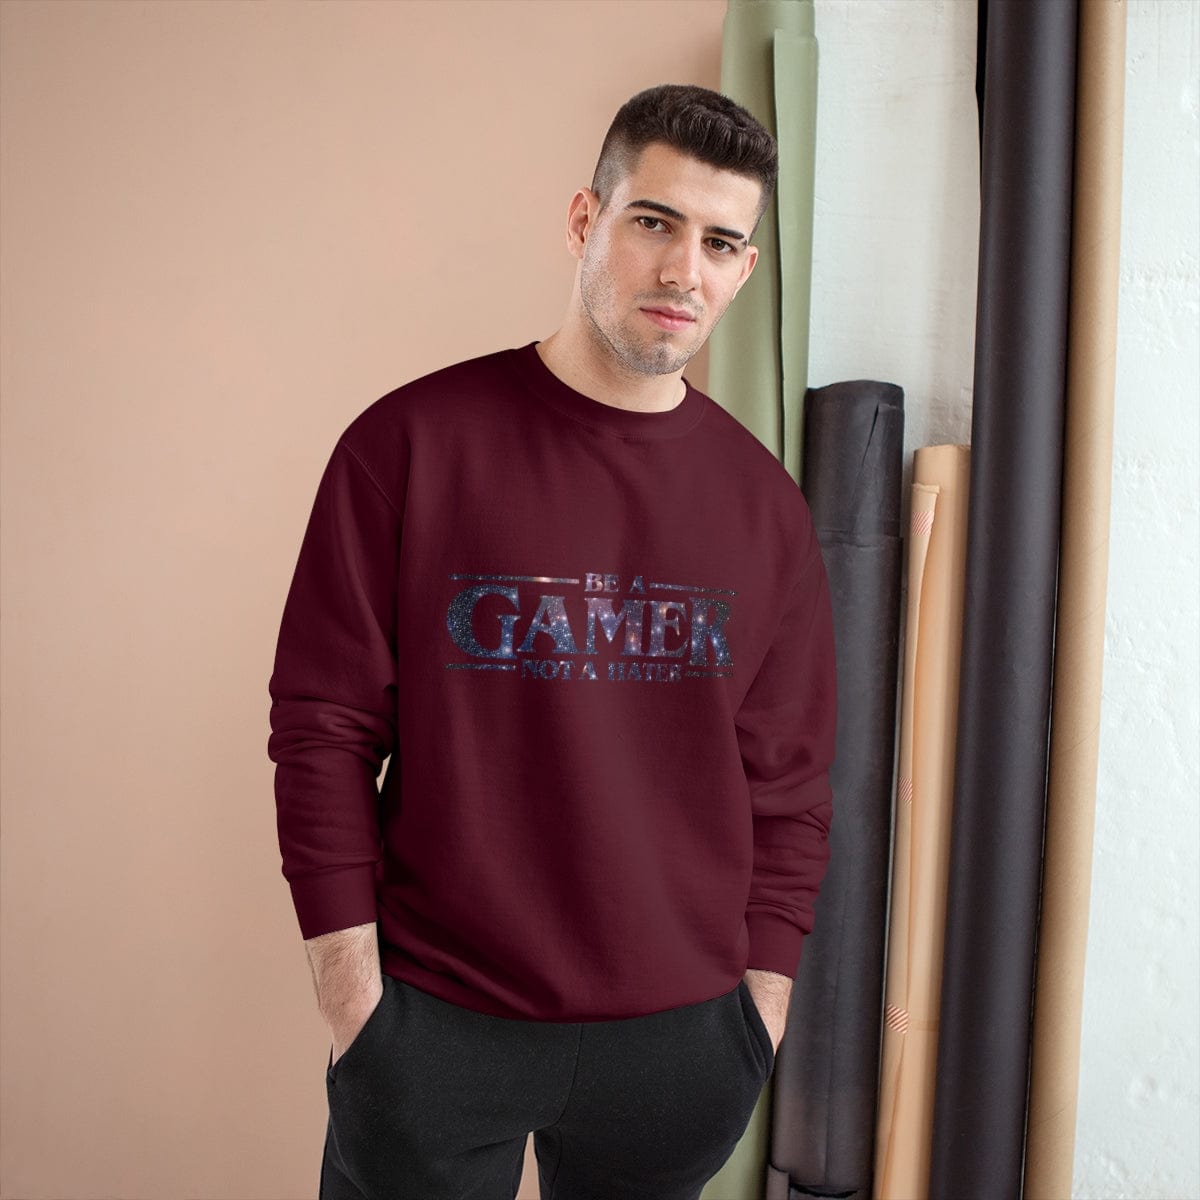 Gamer Fresh x Champion | The Universal Gamer | Exclusive Unisex Sweatshirt